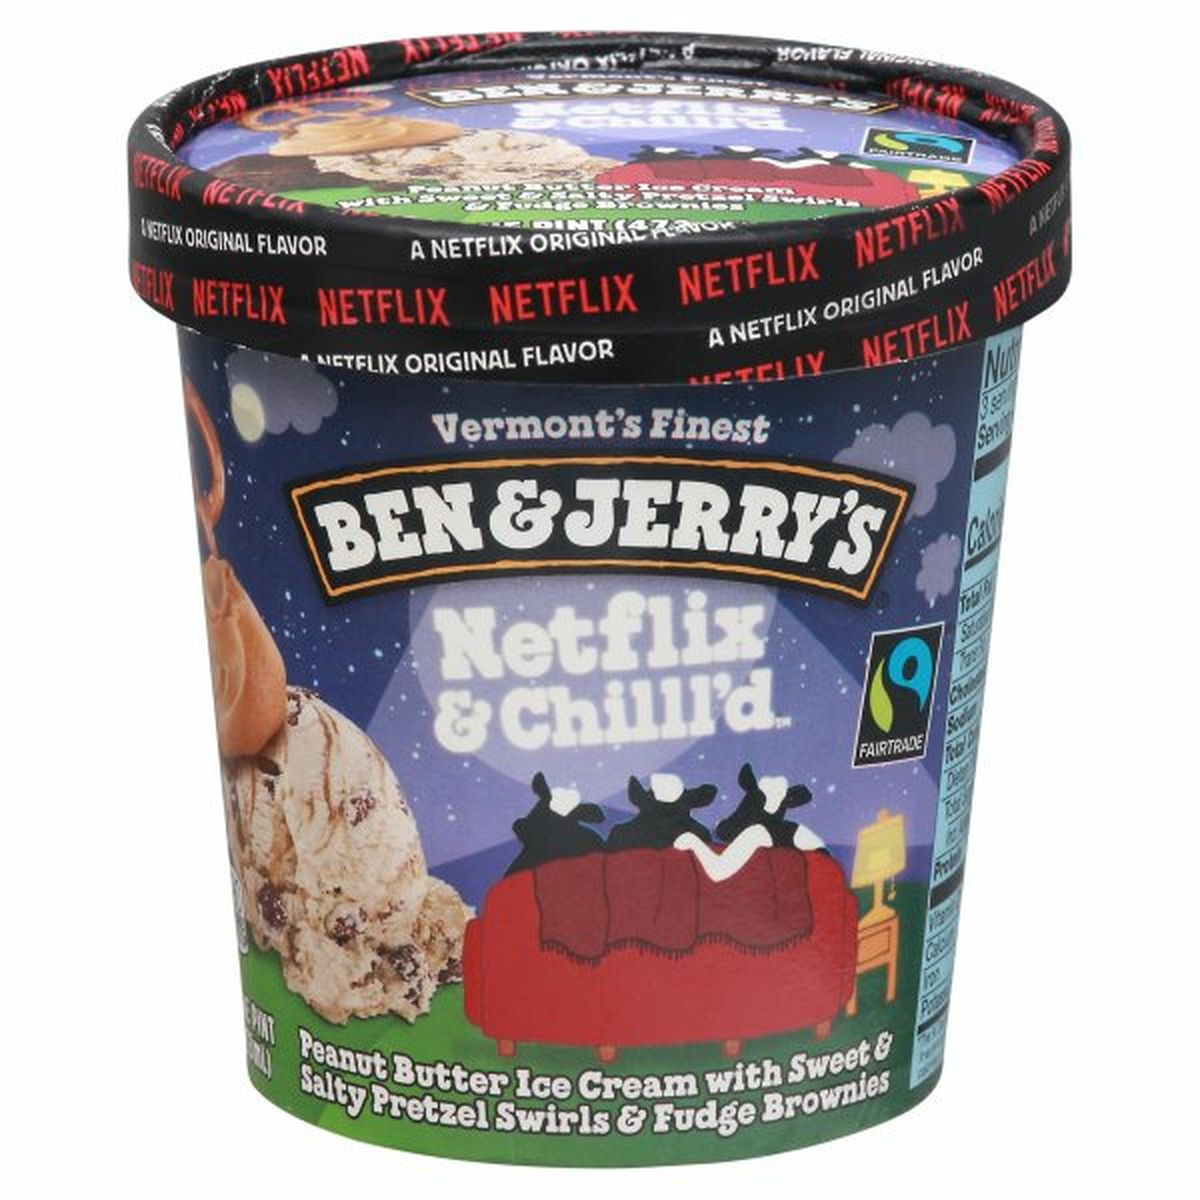 Calories in Ben & Jerry's Ice Cream, Netflix & Chill'd